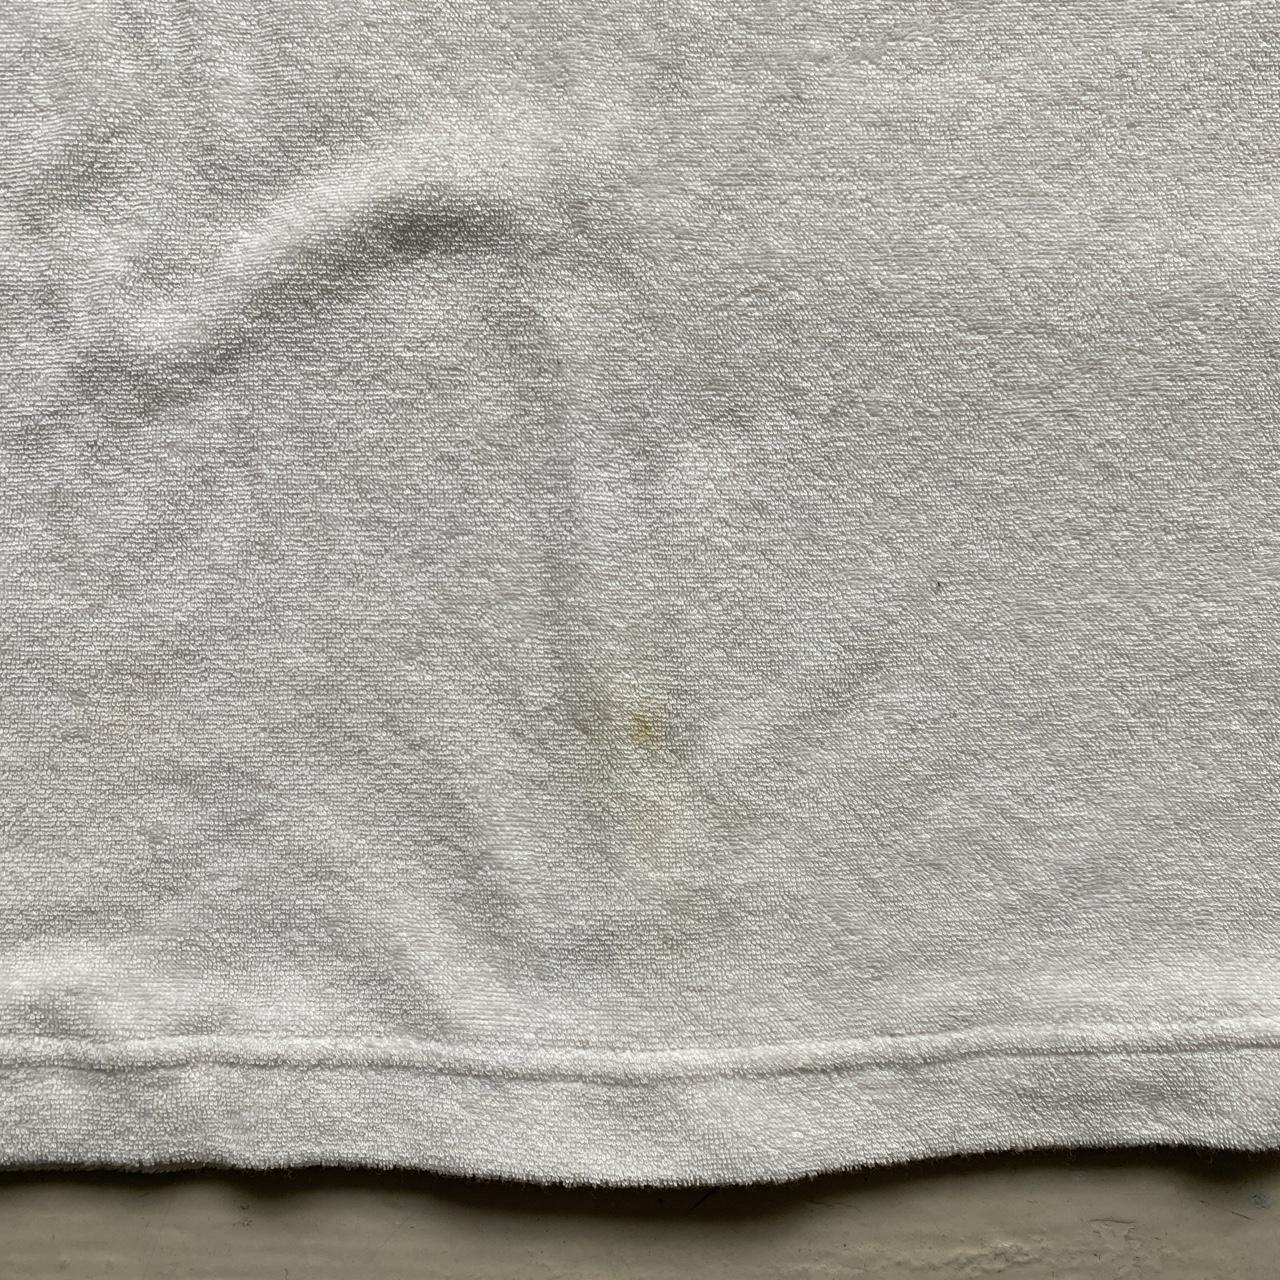 Adidas Palace Germany Towel T Shirt White